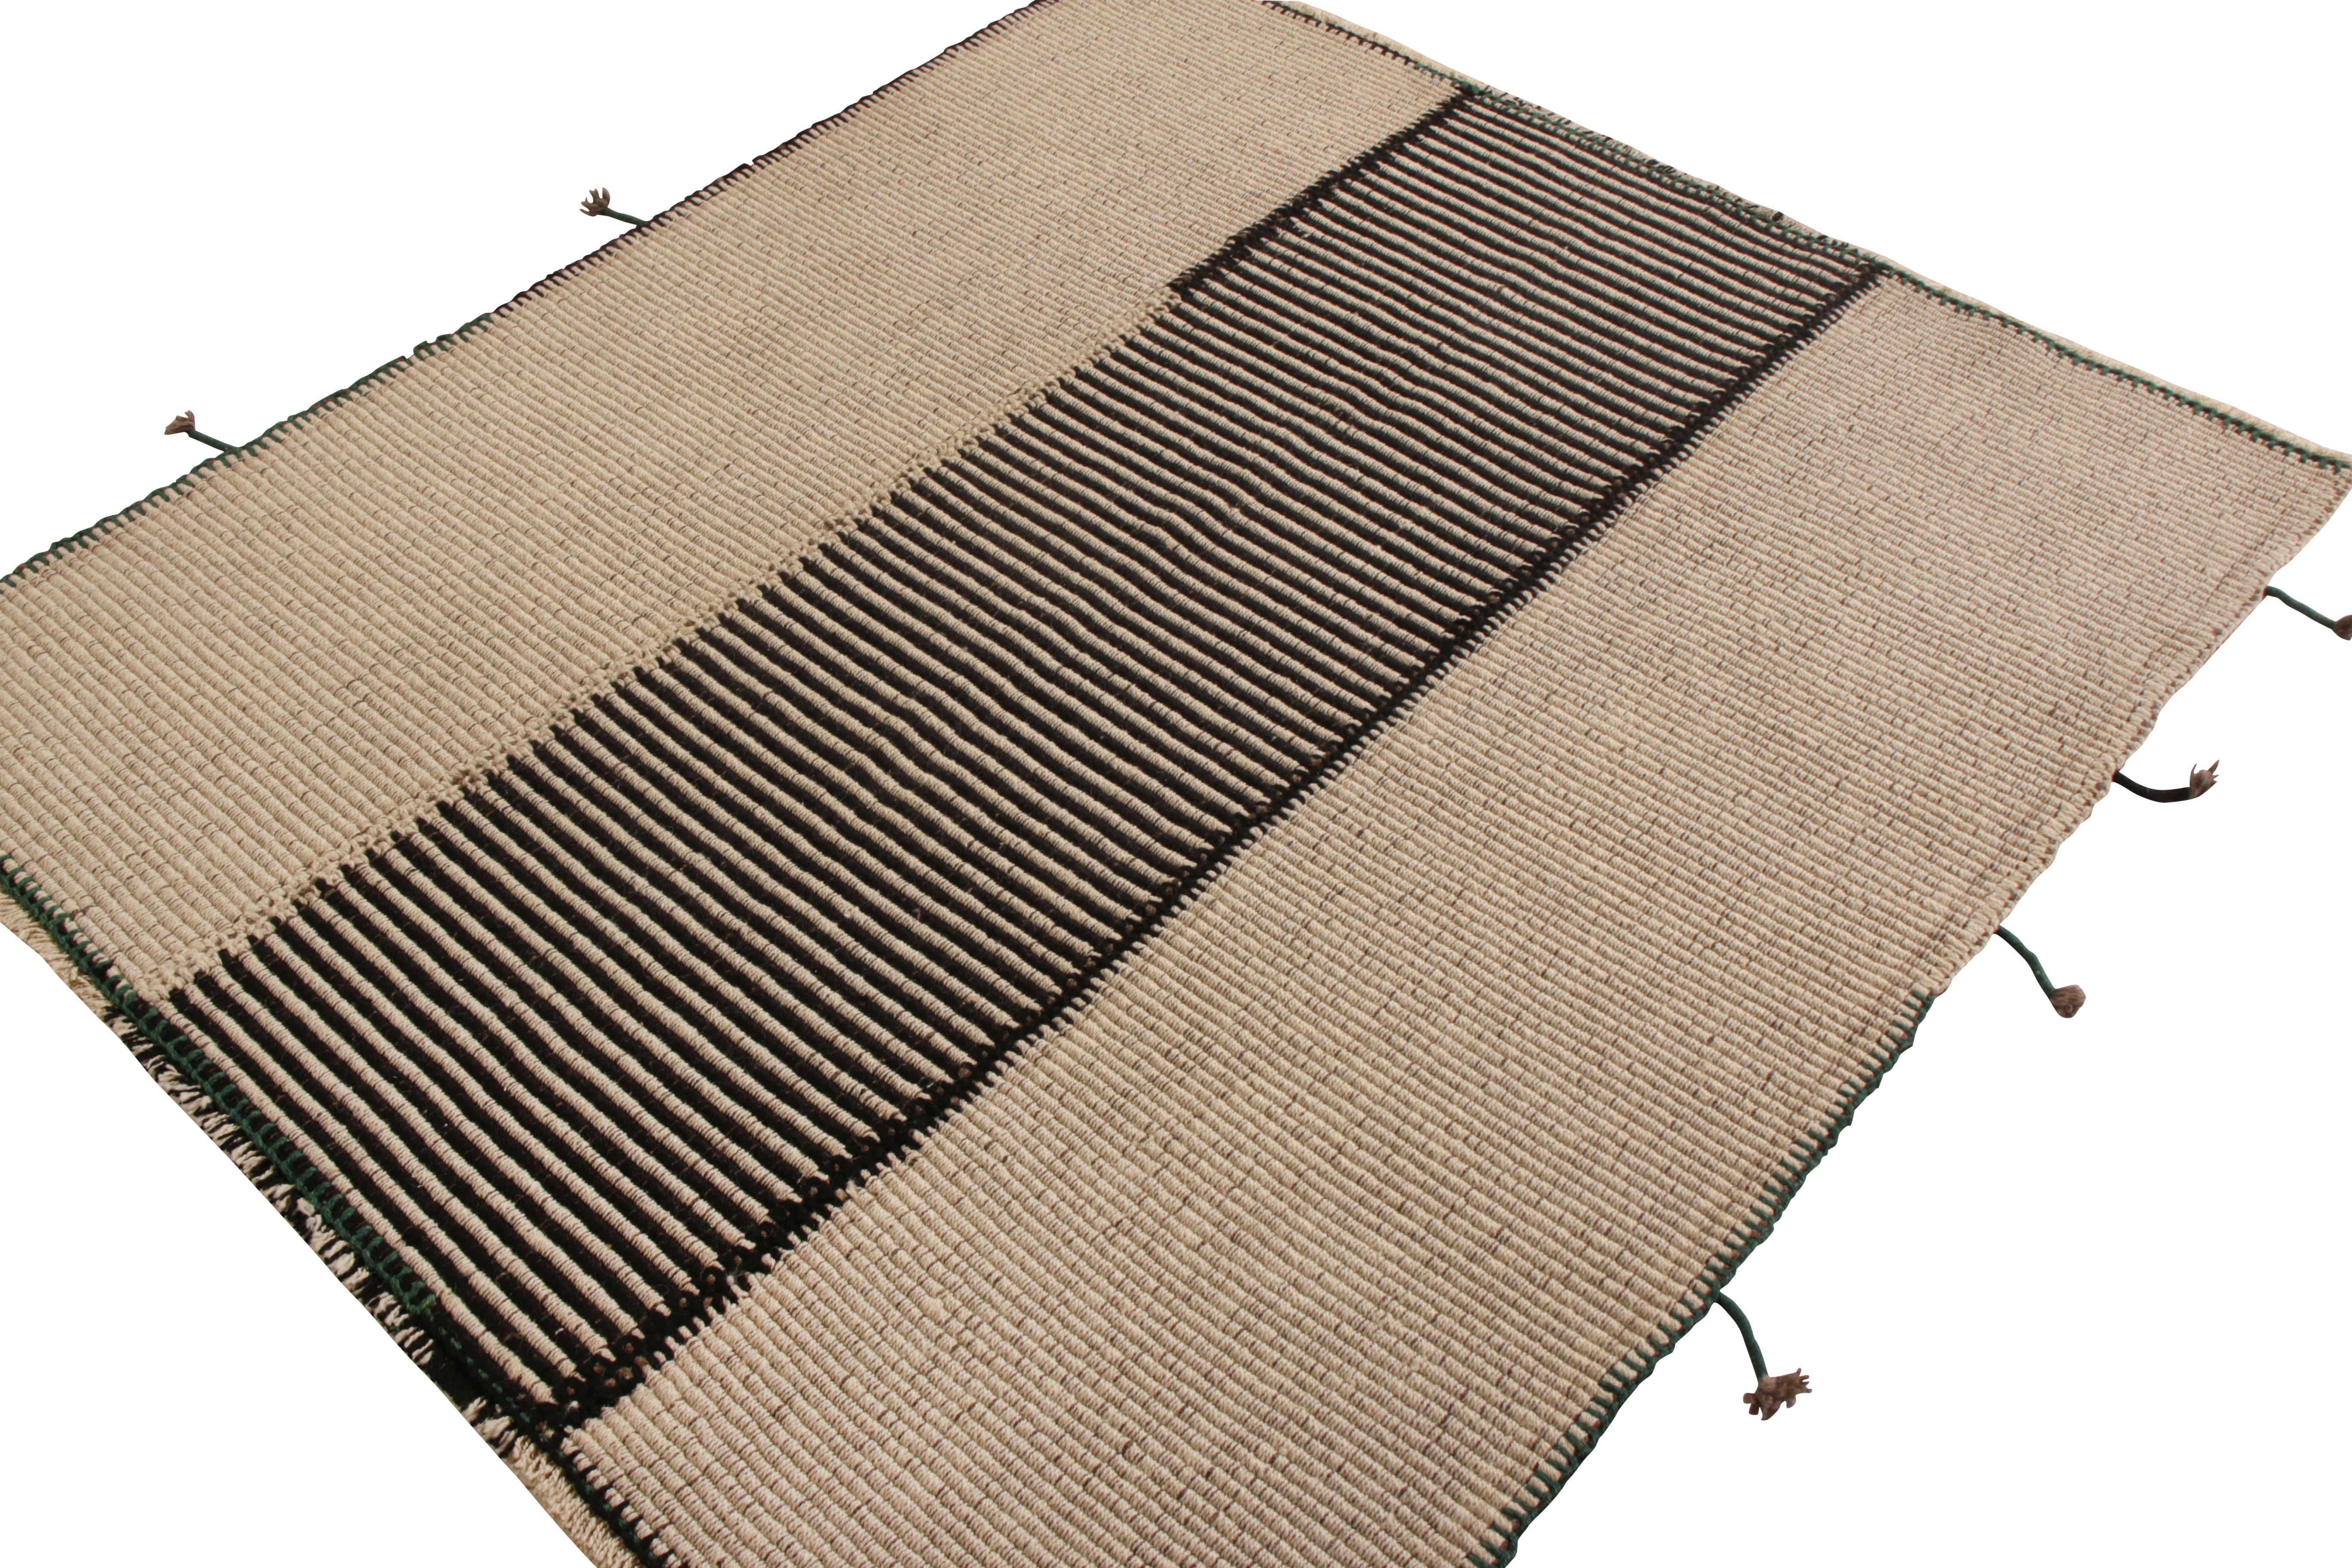 Tribal Modern Custom Kilim in Beige-Brown, Black Striped Pattern by Rug & Kilim For Sale